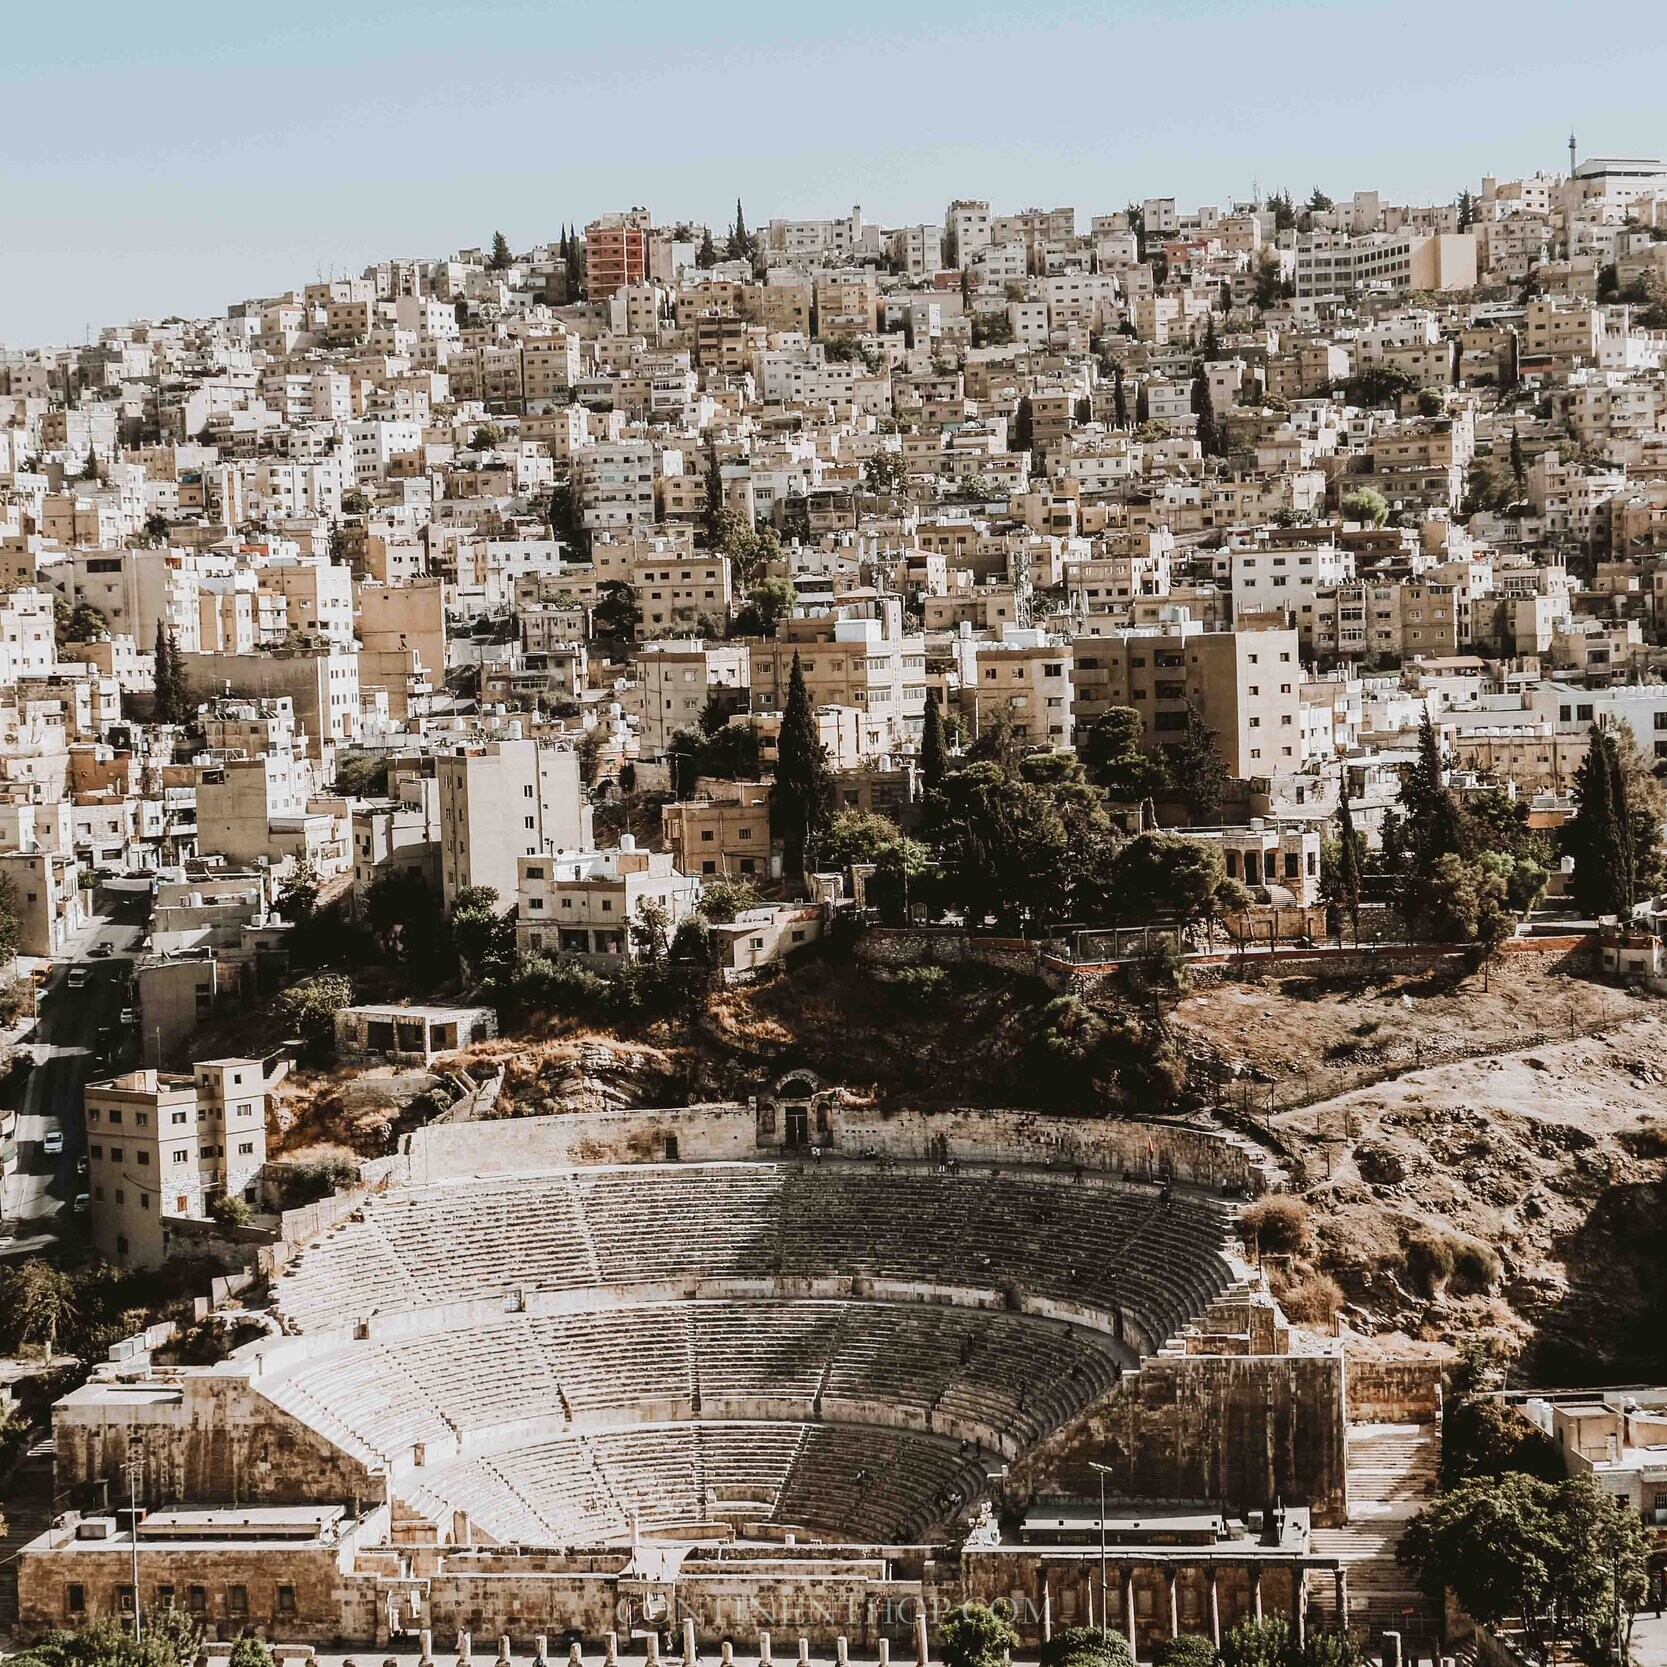 Image of the amphitheater in Jordan